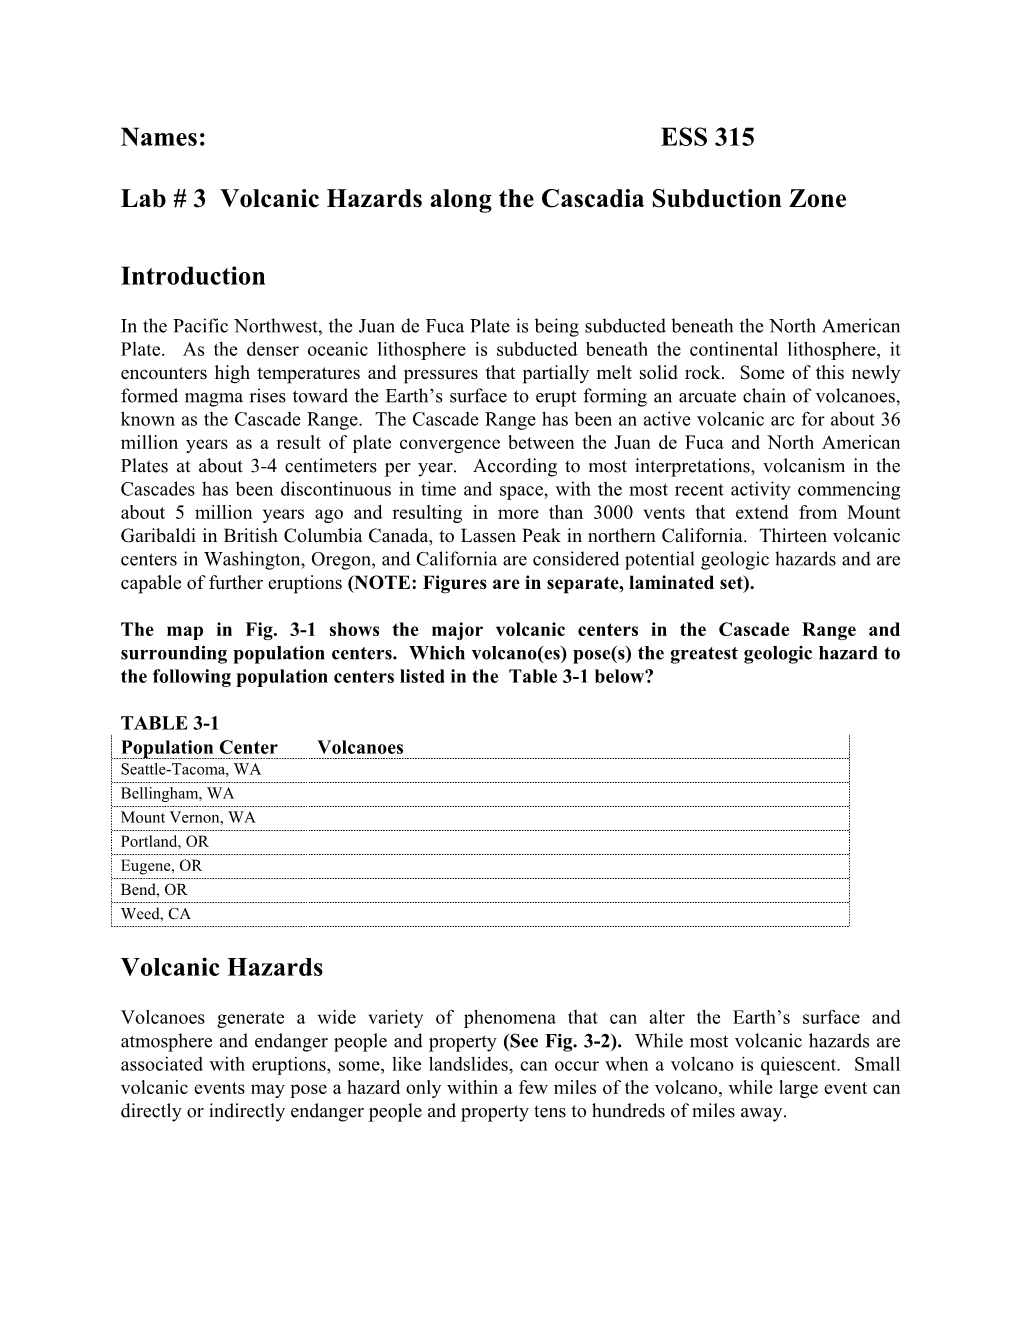 Volcanic Hazards Along the Cascadia Subduction Zone